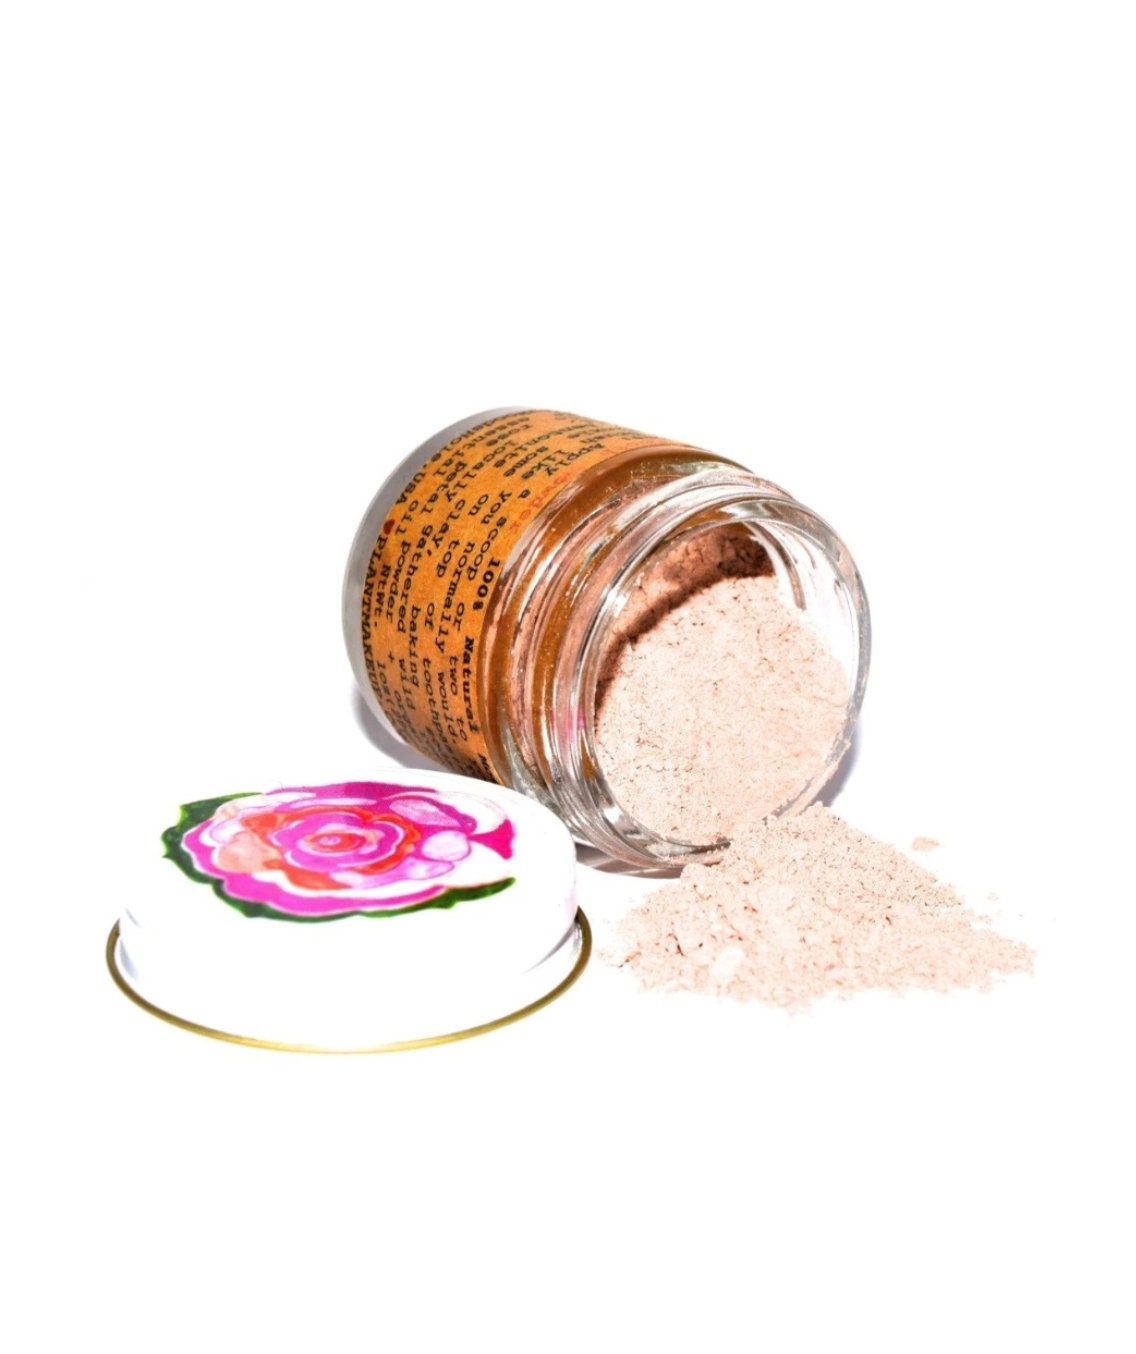 Gaia's Kiss Botanical Powder, Organic Rose Powder, Pearl Powder